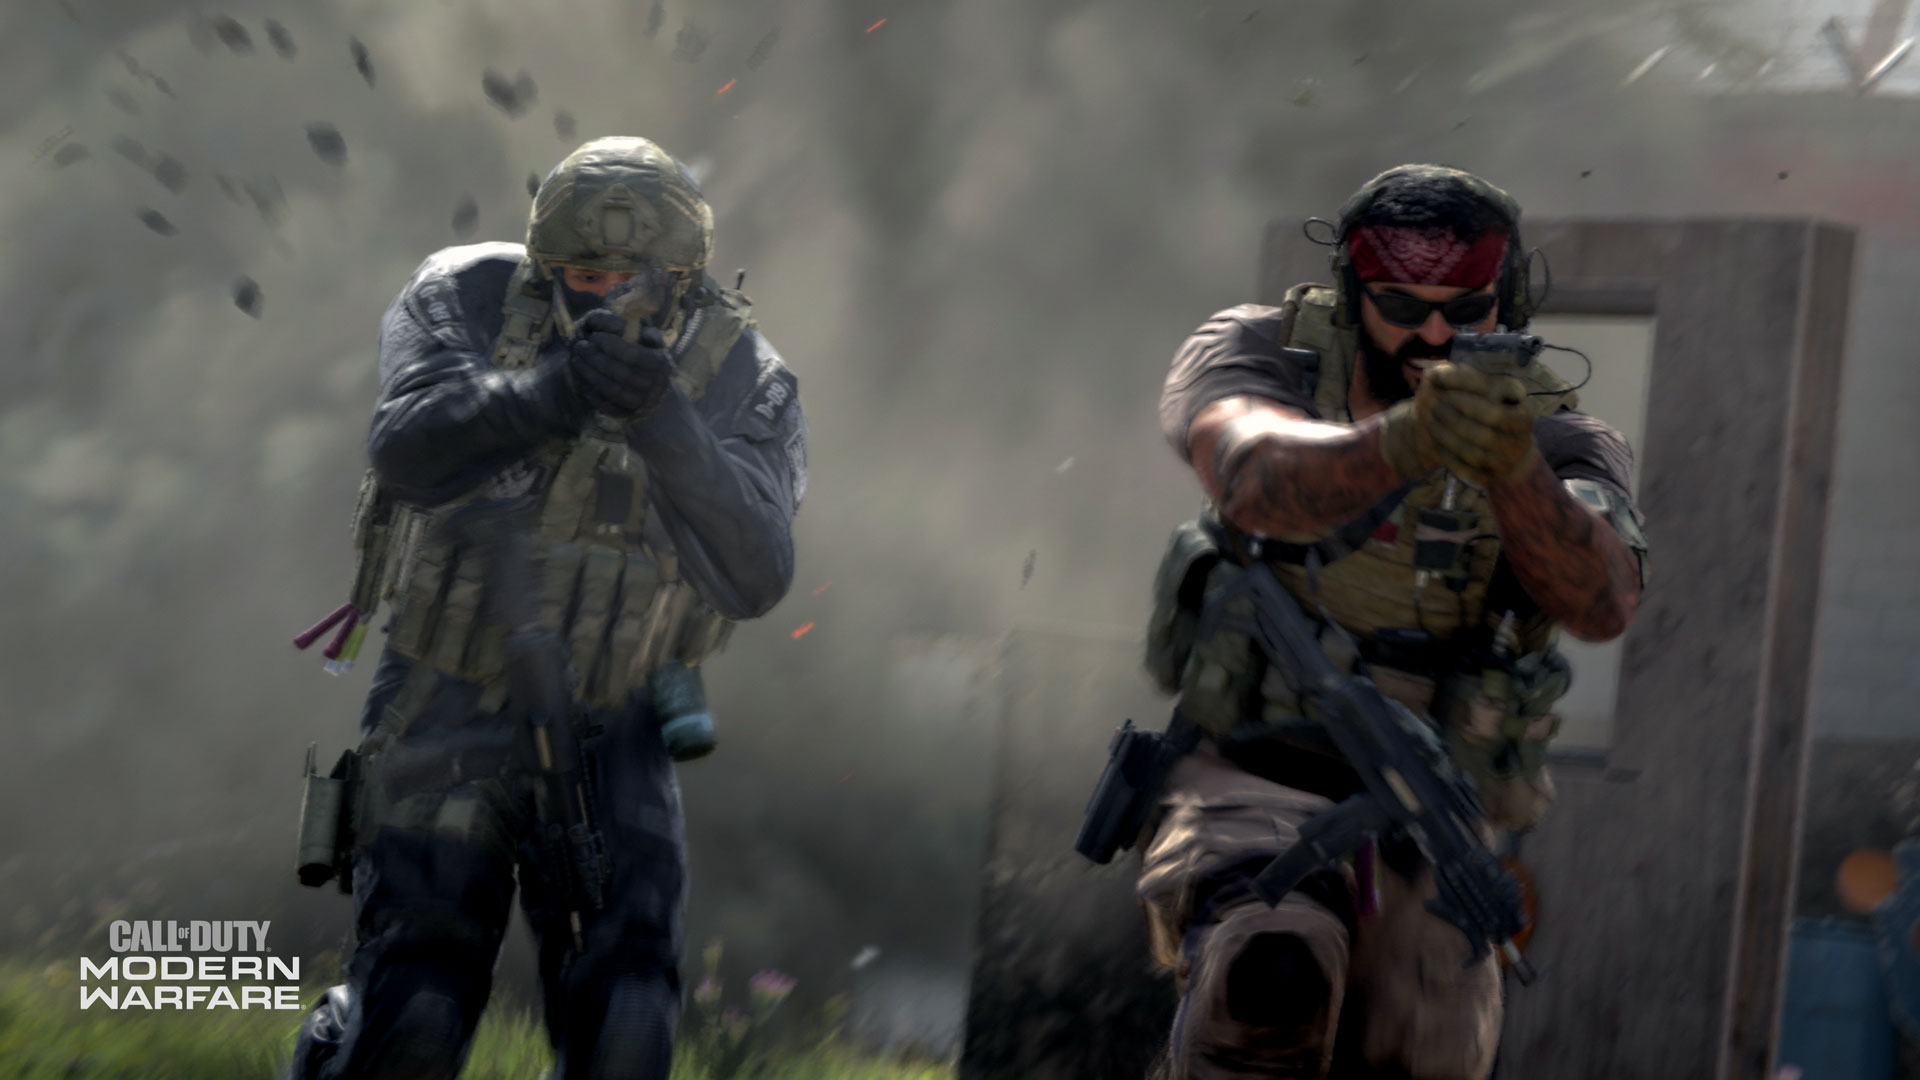 Call of Duty Advance Warfare tips to win